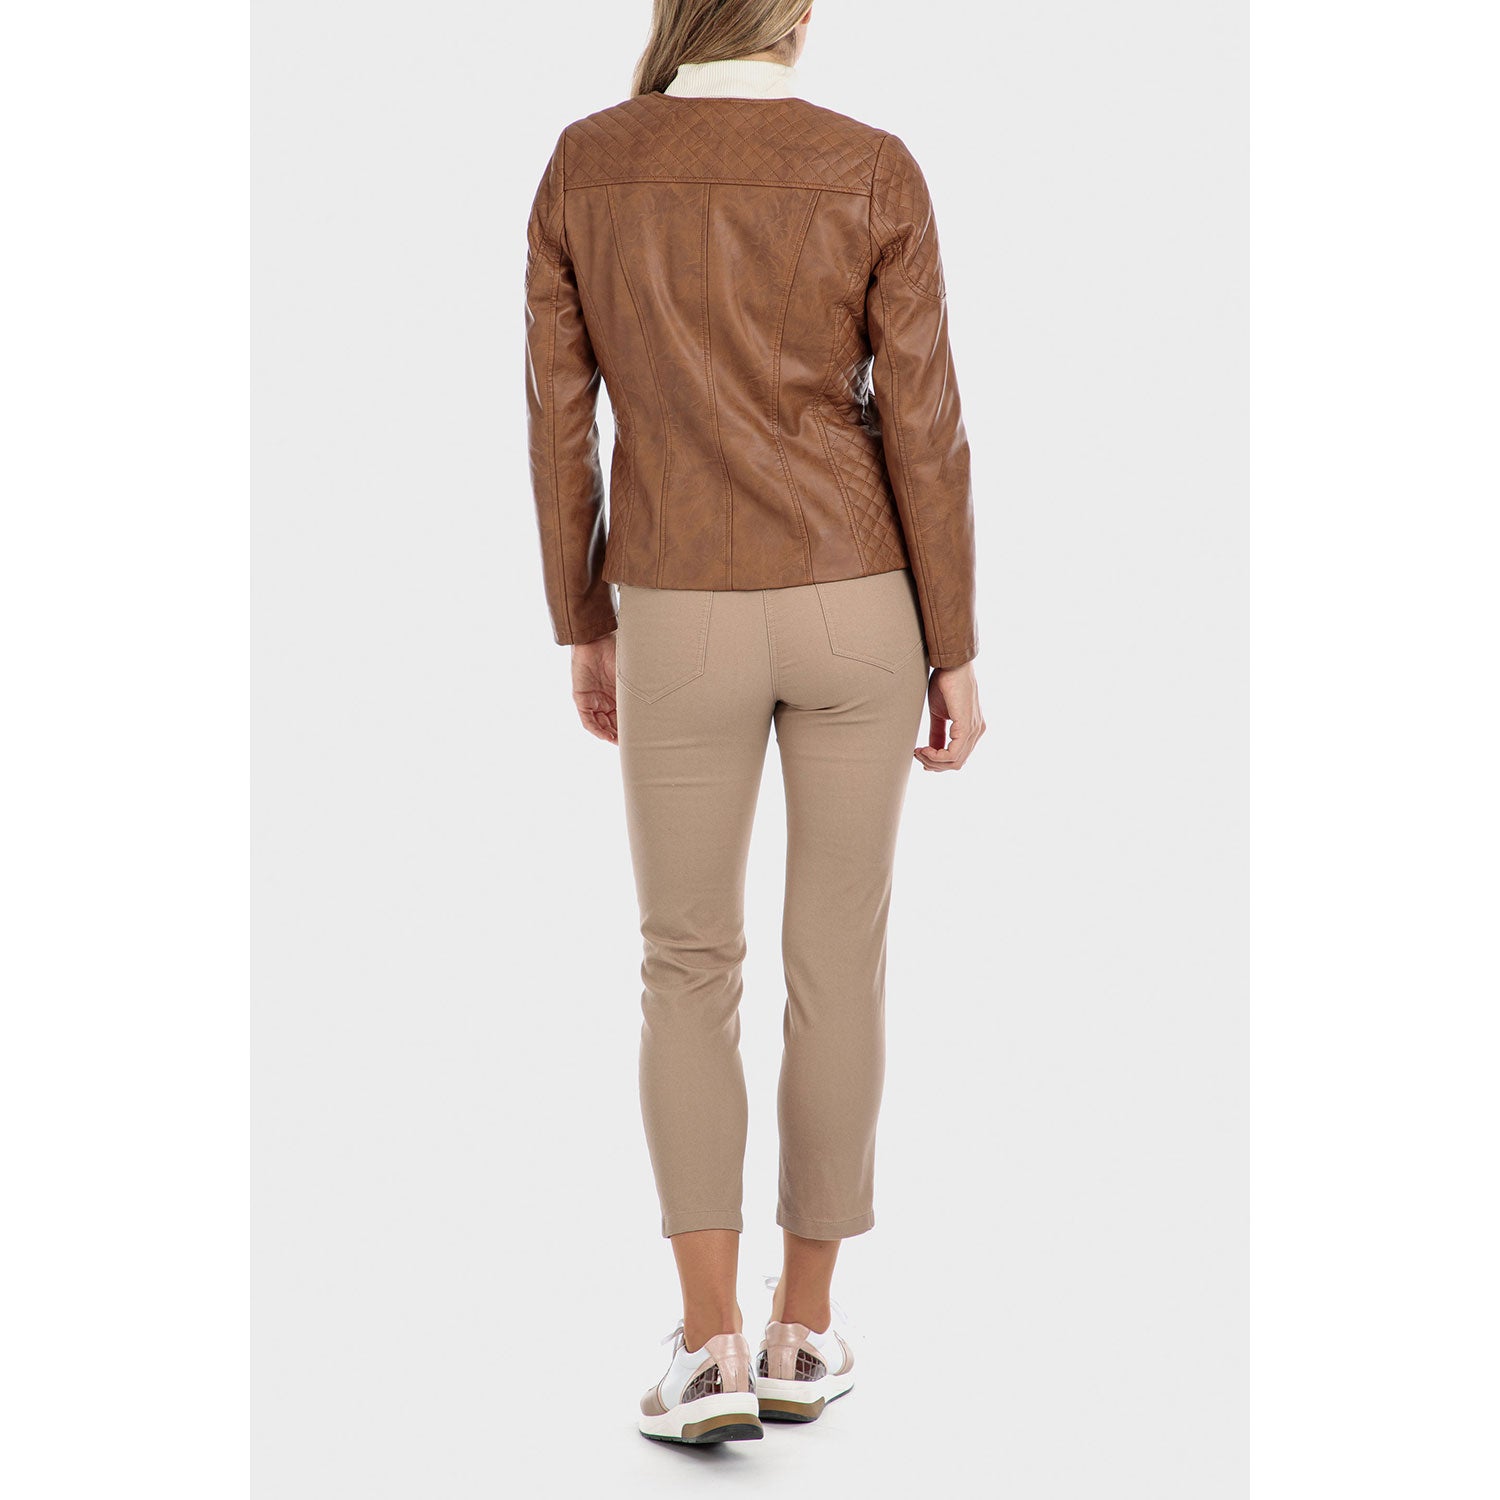 Punt Roma Jacket - Beige Camel 4 Shaws Department Stores